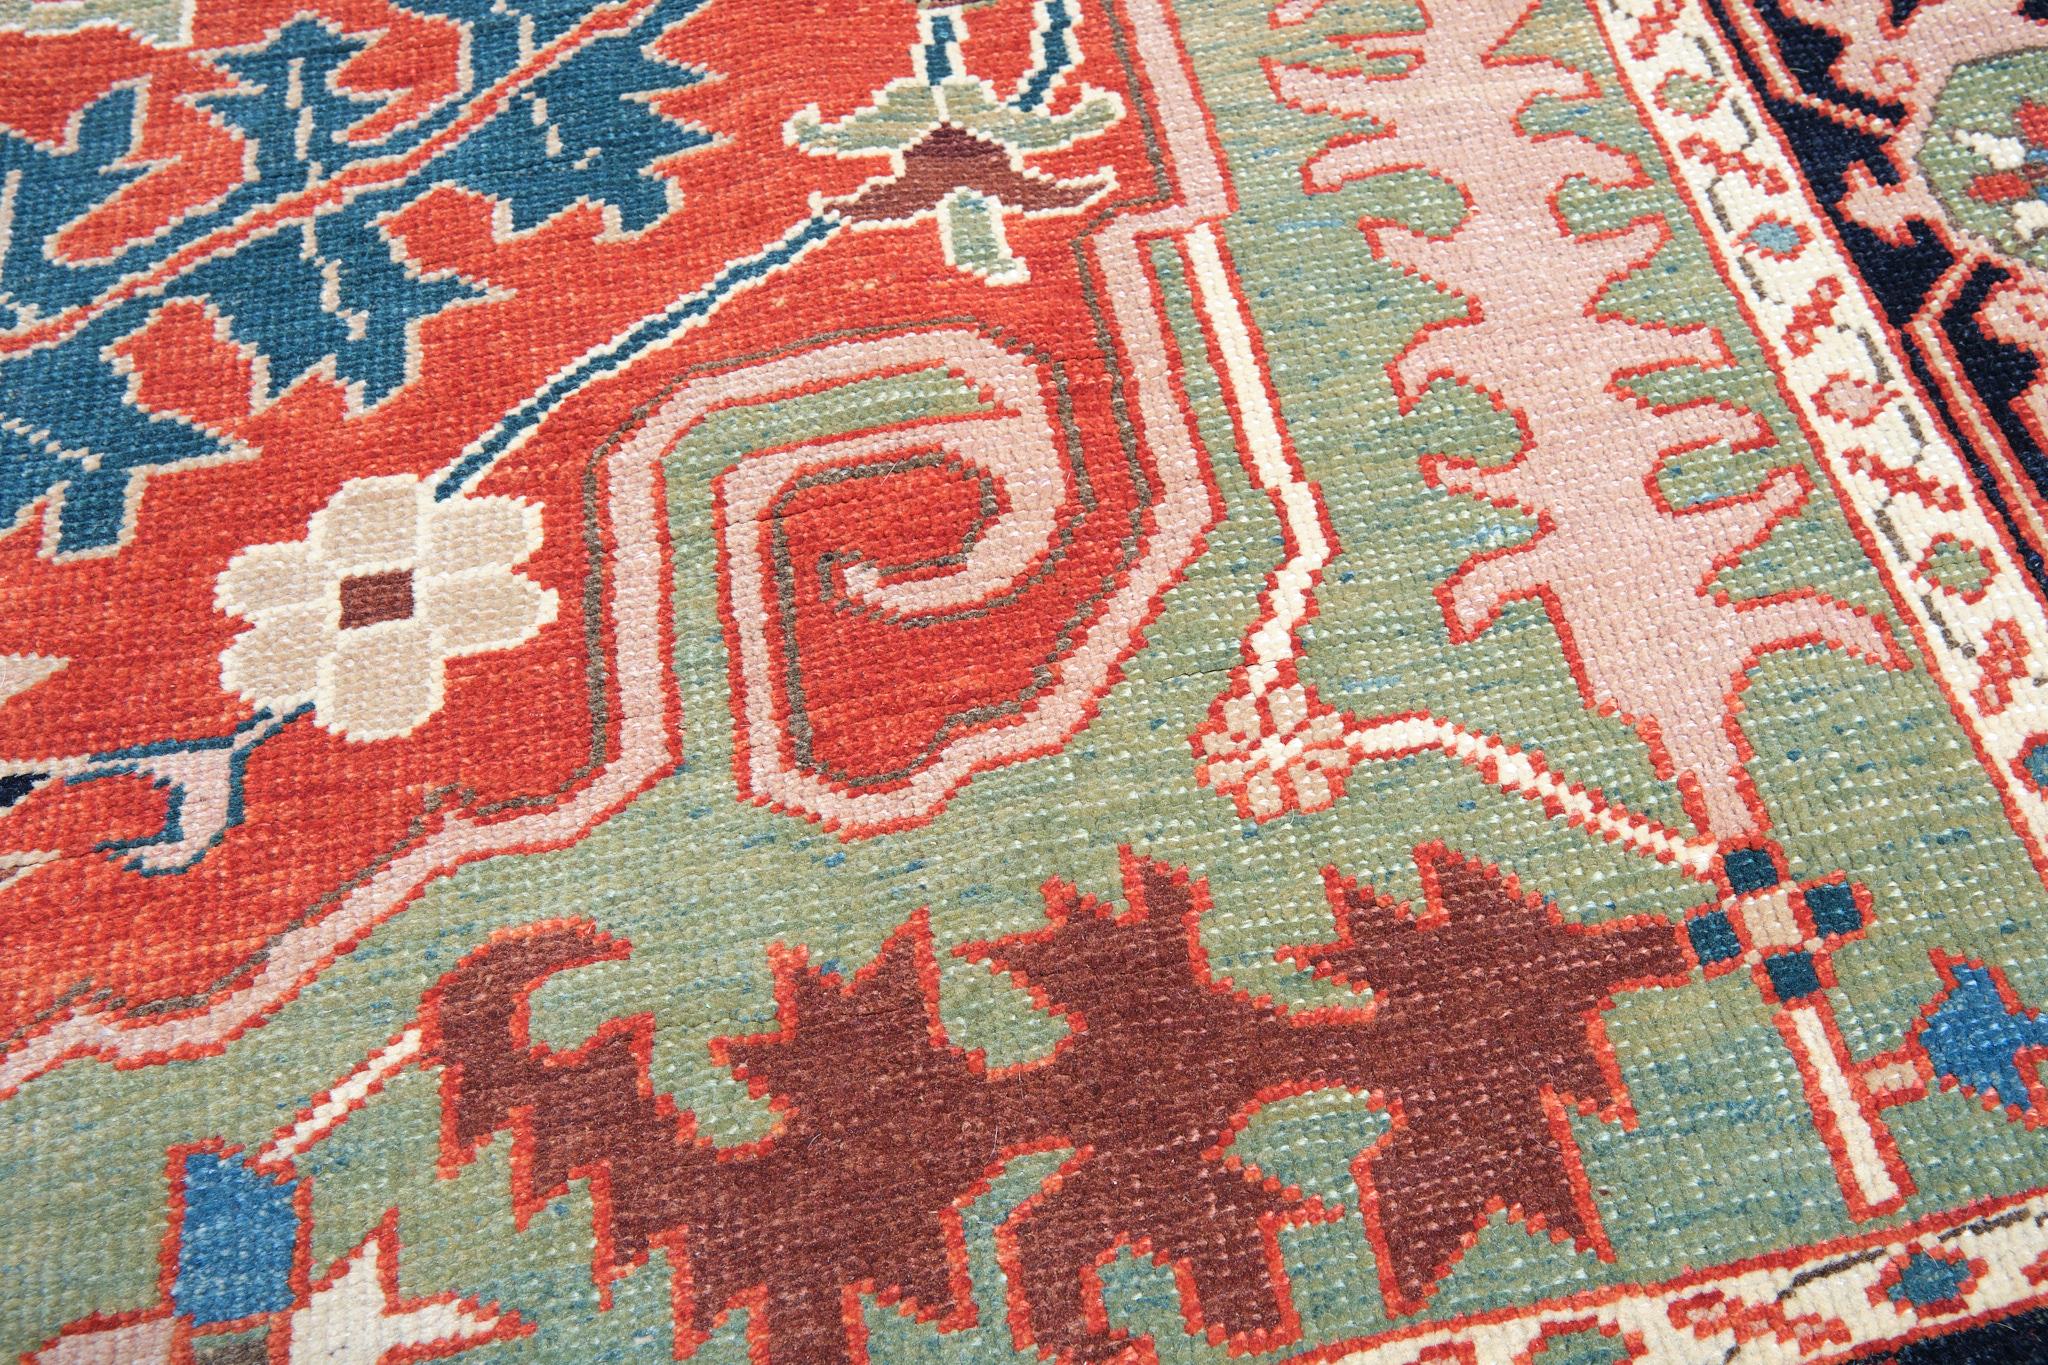 Turkish Ararat Rugs Heriz Medallion Rug 19th Century Persian Revival Carpet Natural Dyed For Sale